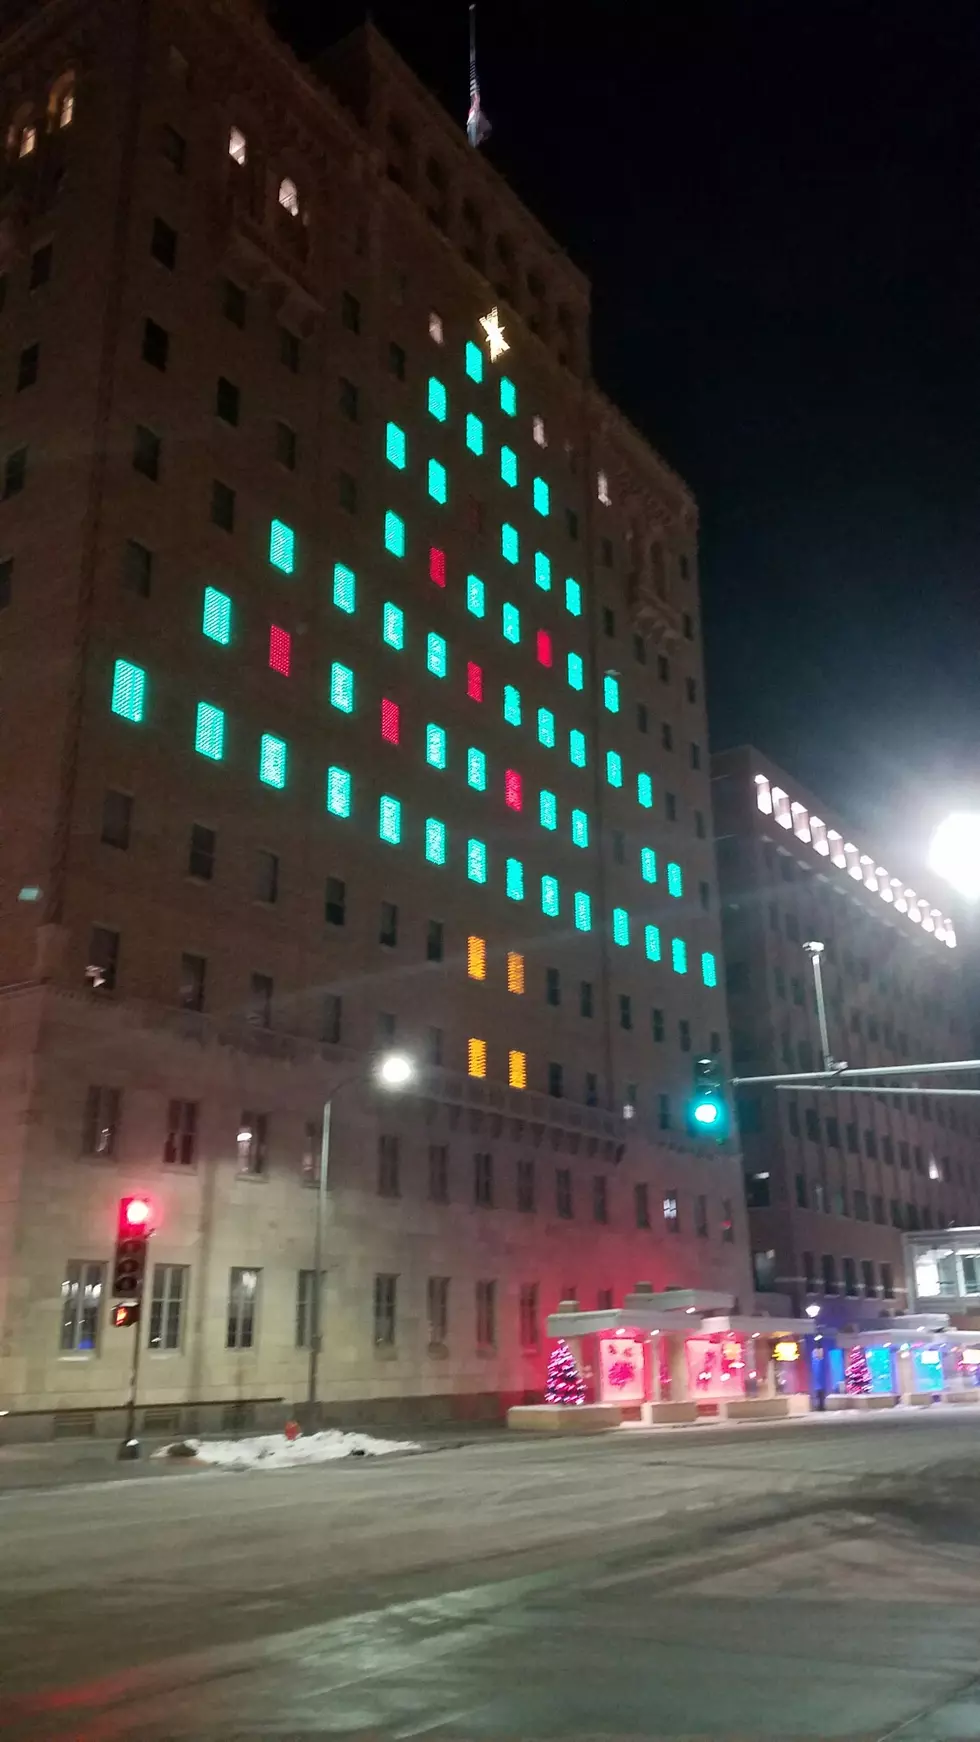 Downtown Rochester Lights Up After Dark